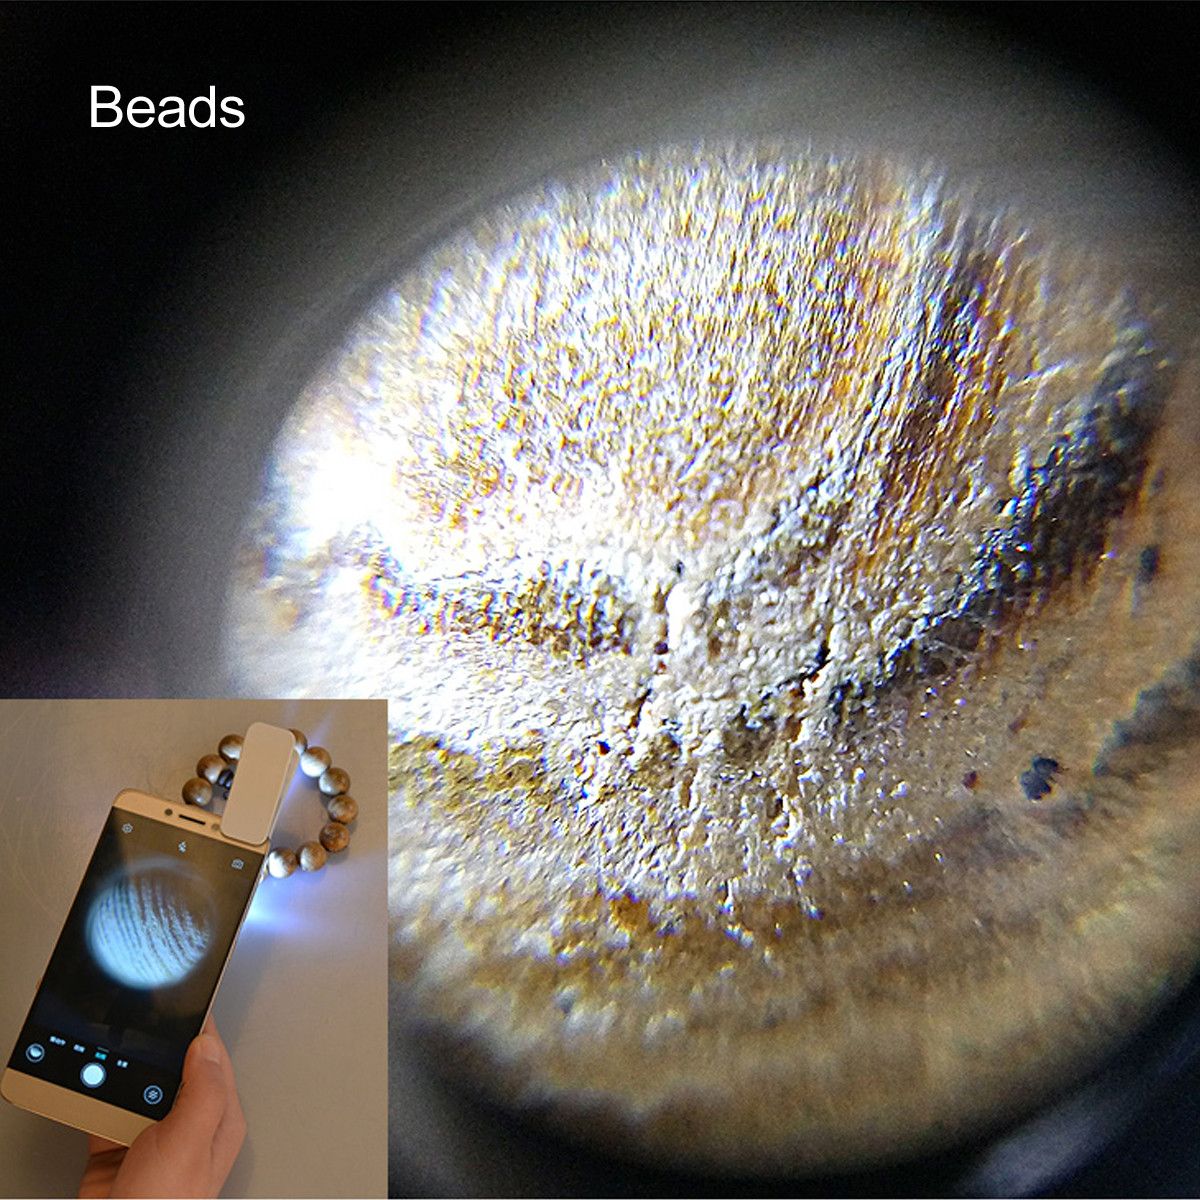 60X-Handheld-Mini-Pocket-Microscope-Loupe-Jeweler-Magnifier-LED-Light-Trendy-1066786